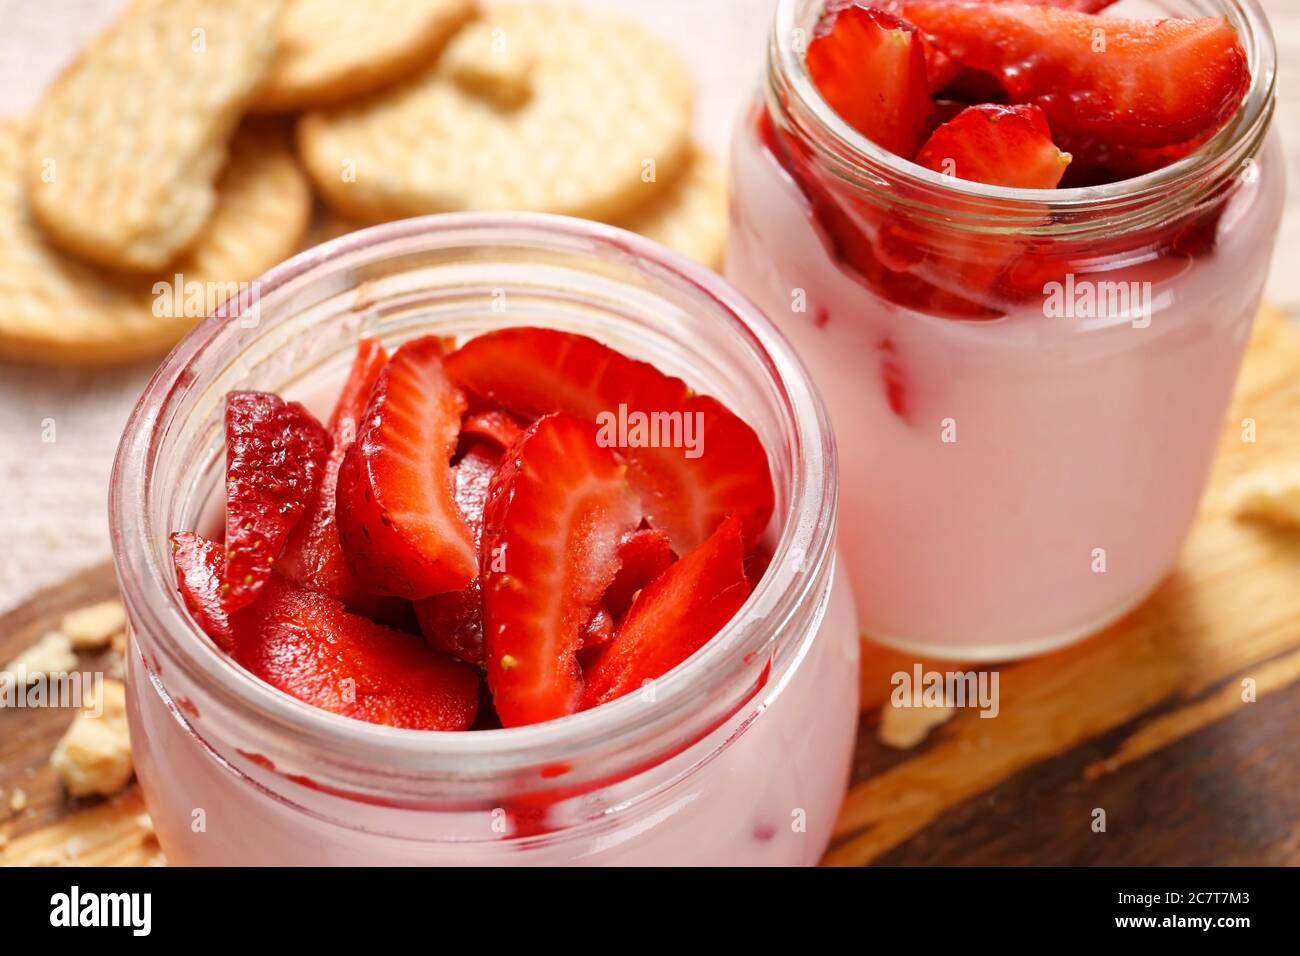 Jarras de yogur de fresa saludable en la mesa, primer plano Foto de stock